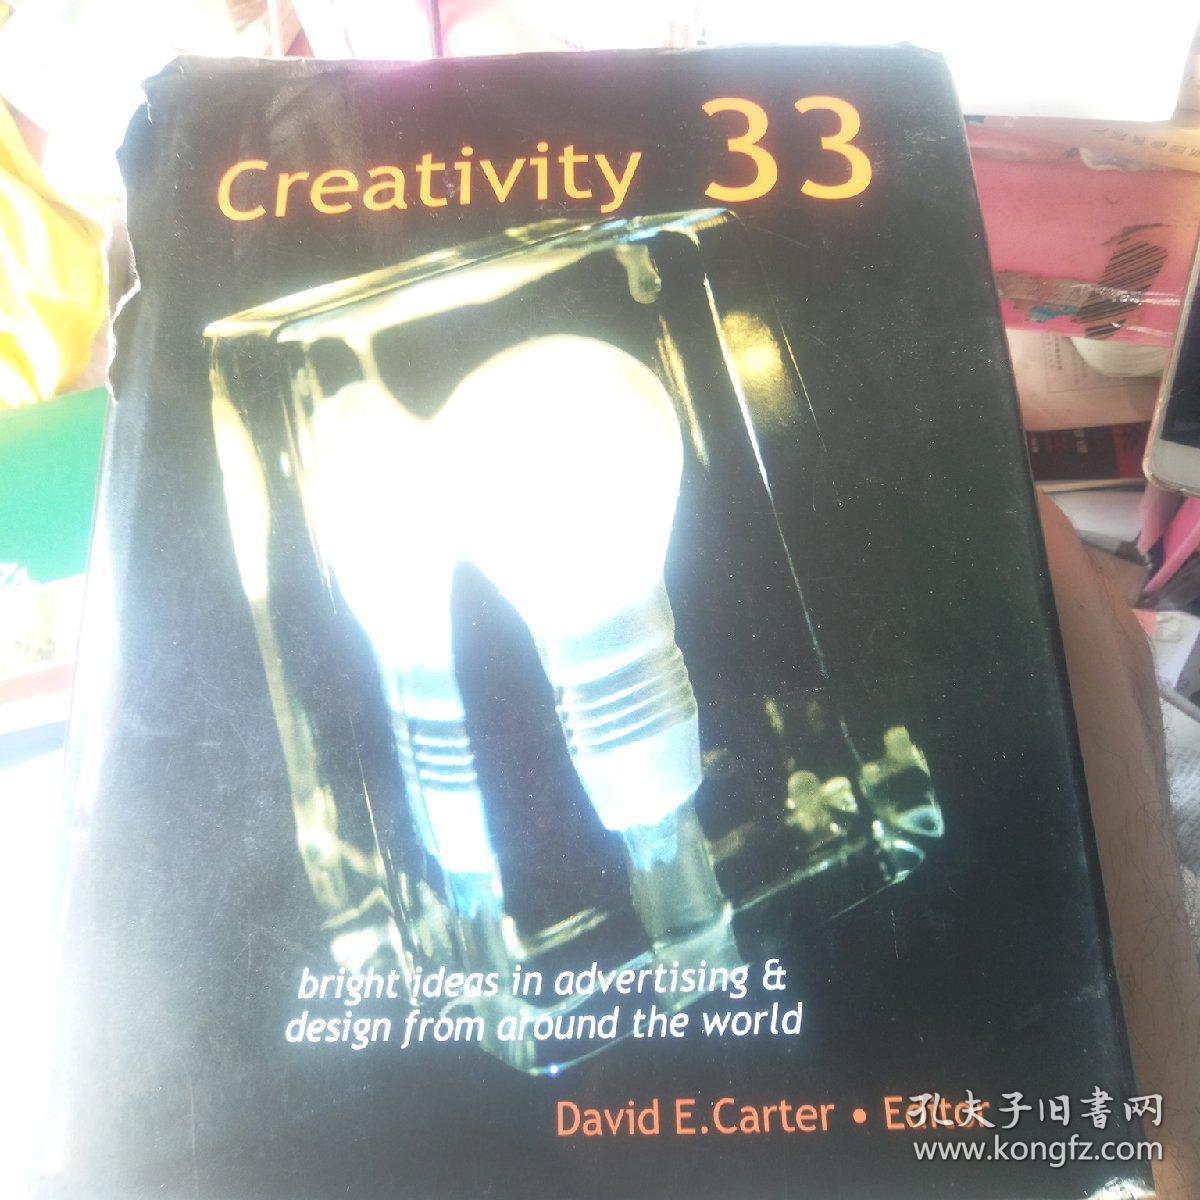 Creativity 33